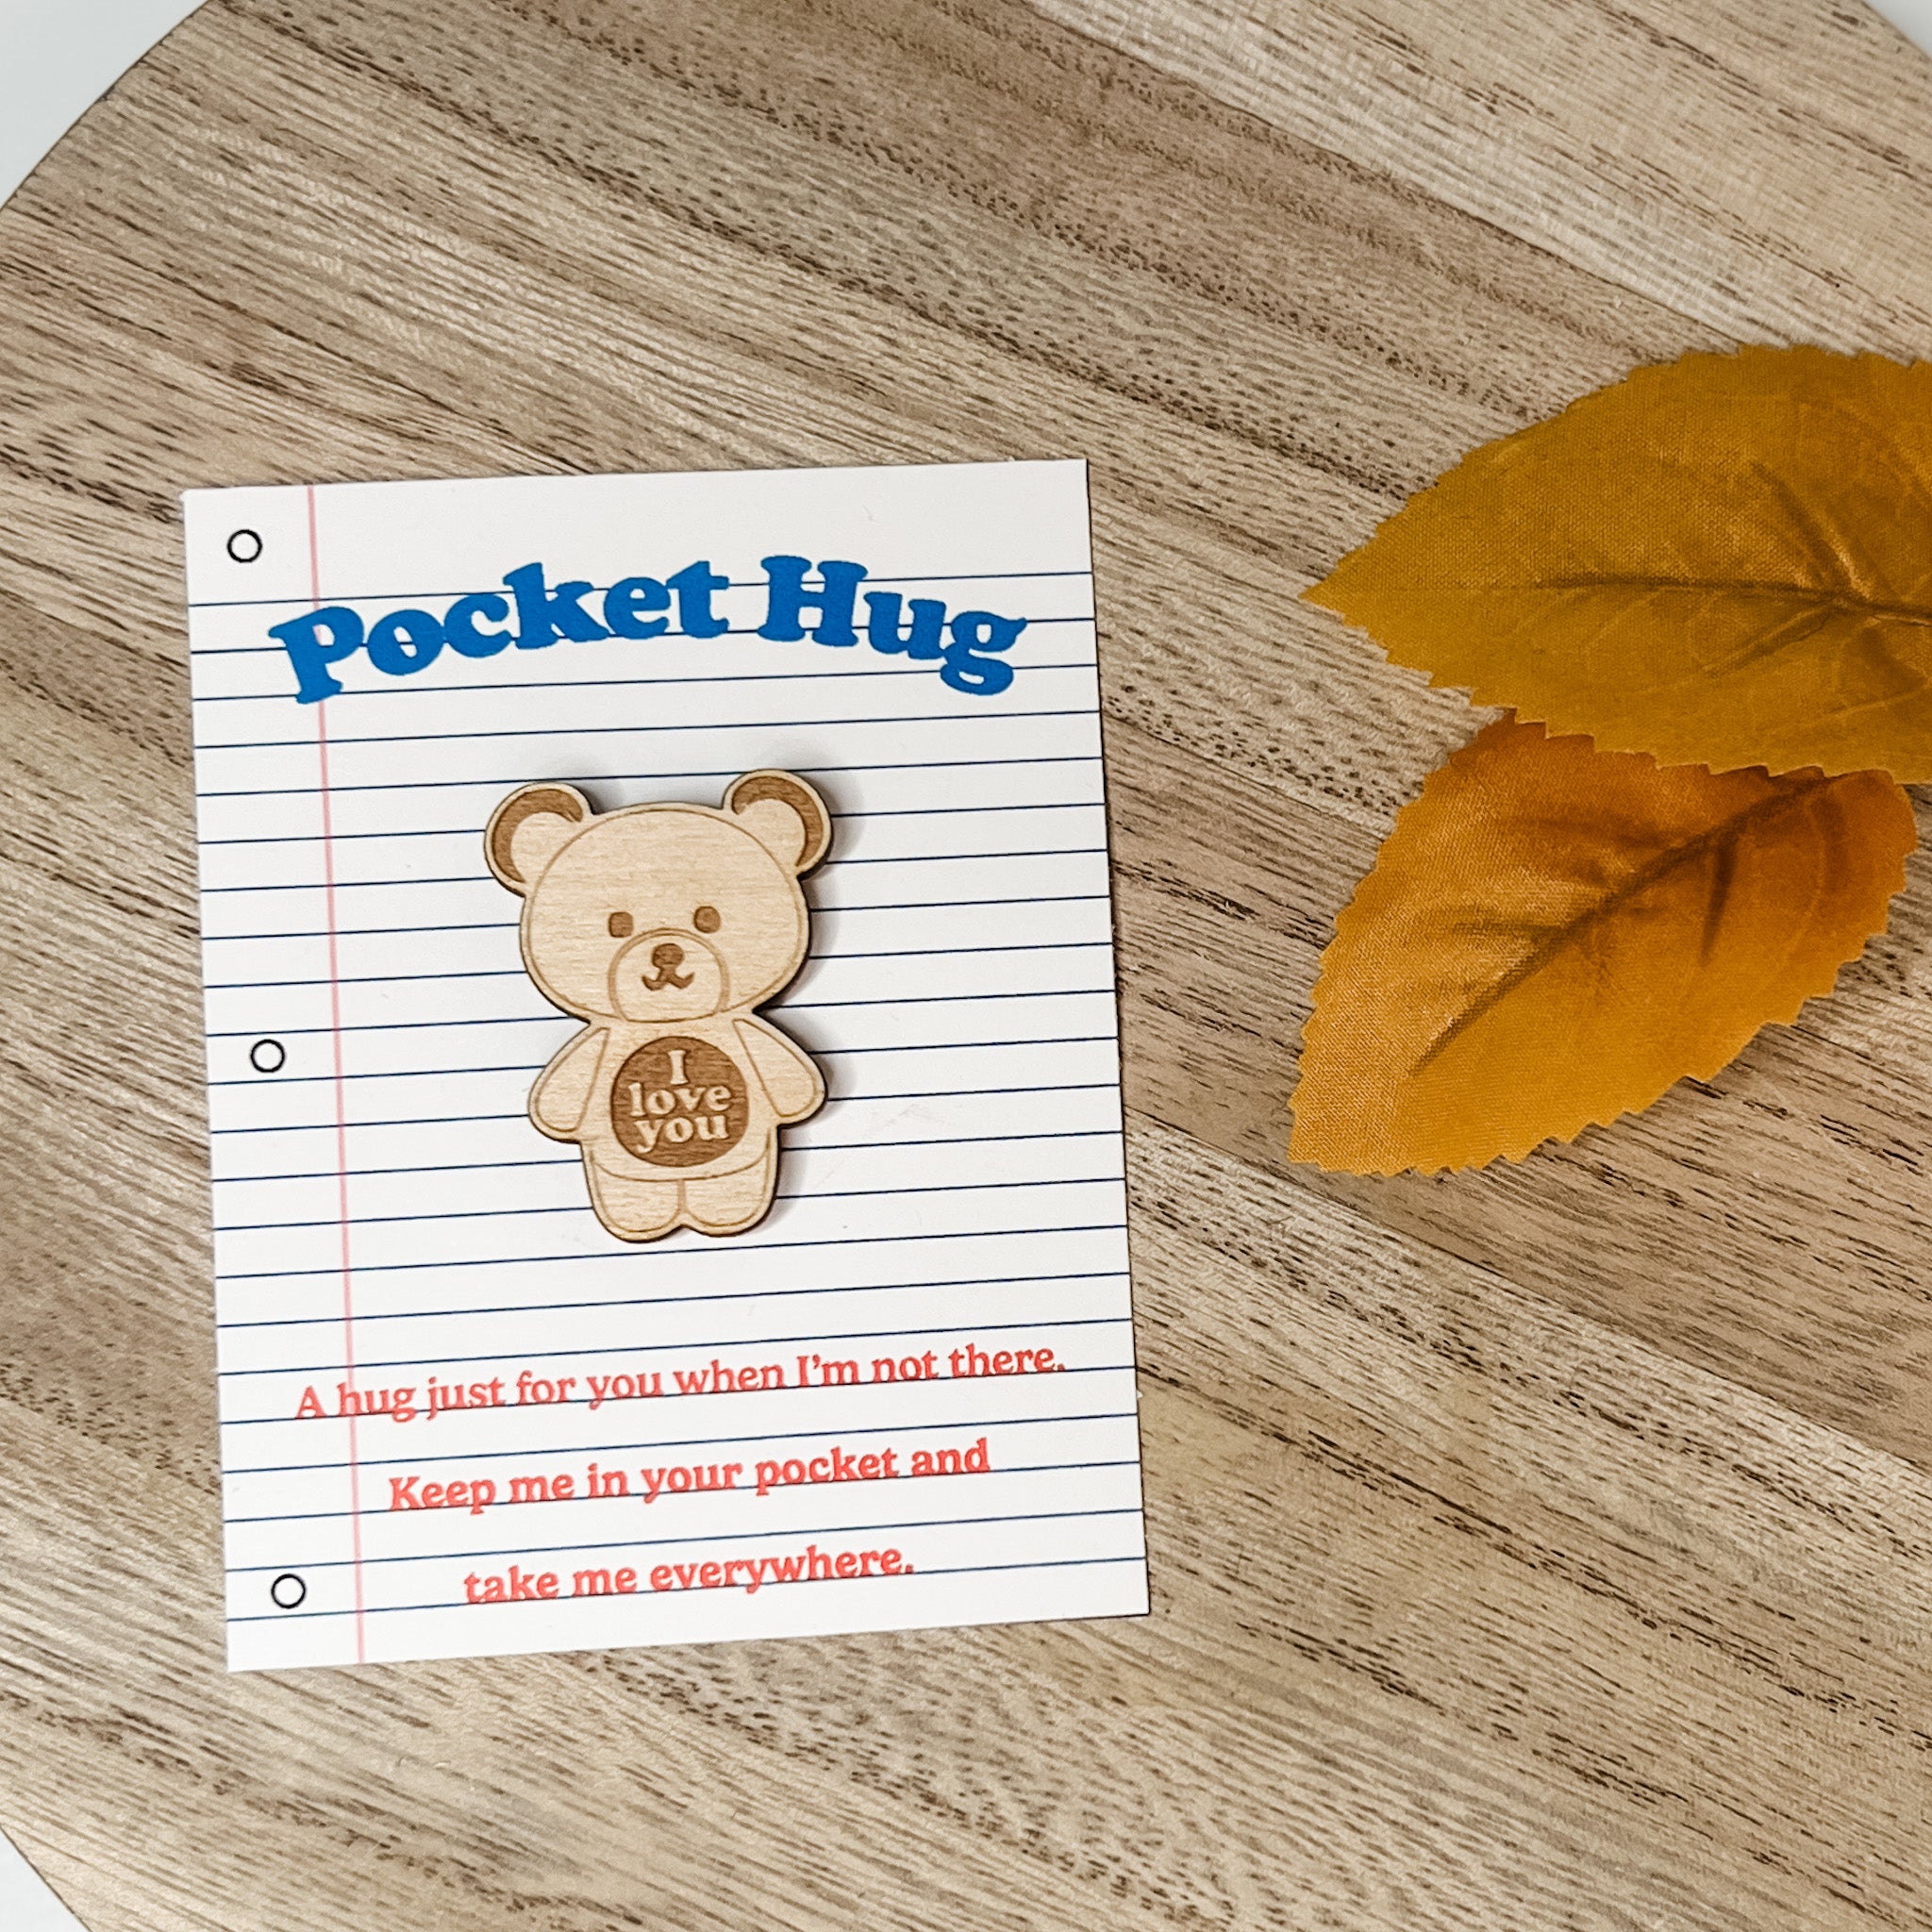 Cute Frog plush, Pocket hug in a box, New home gift, Housewa - Inspire  Uplift